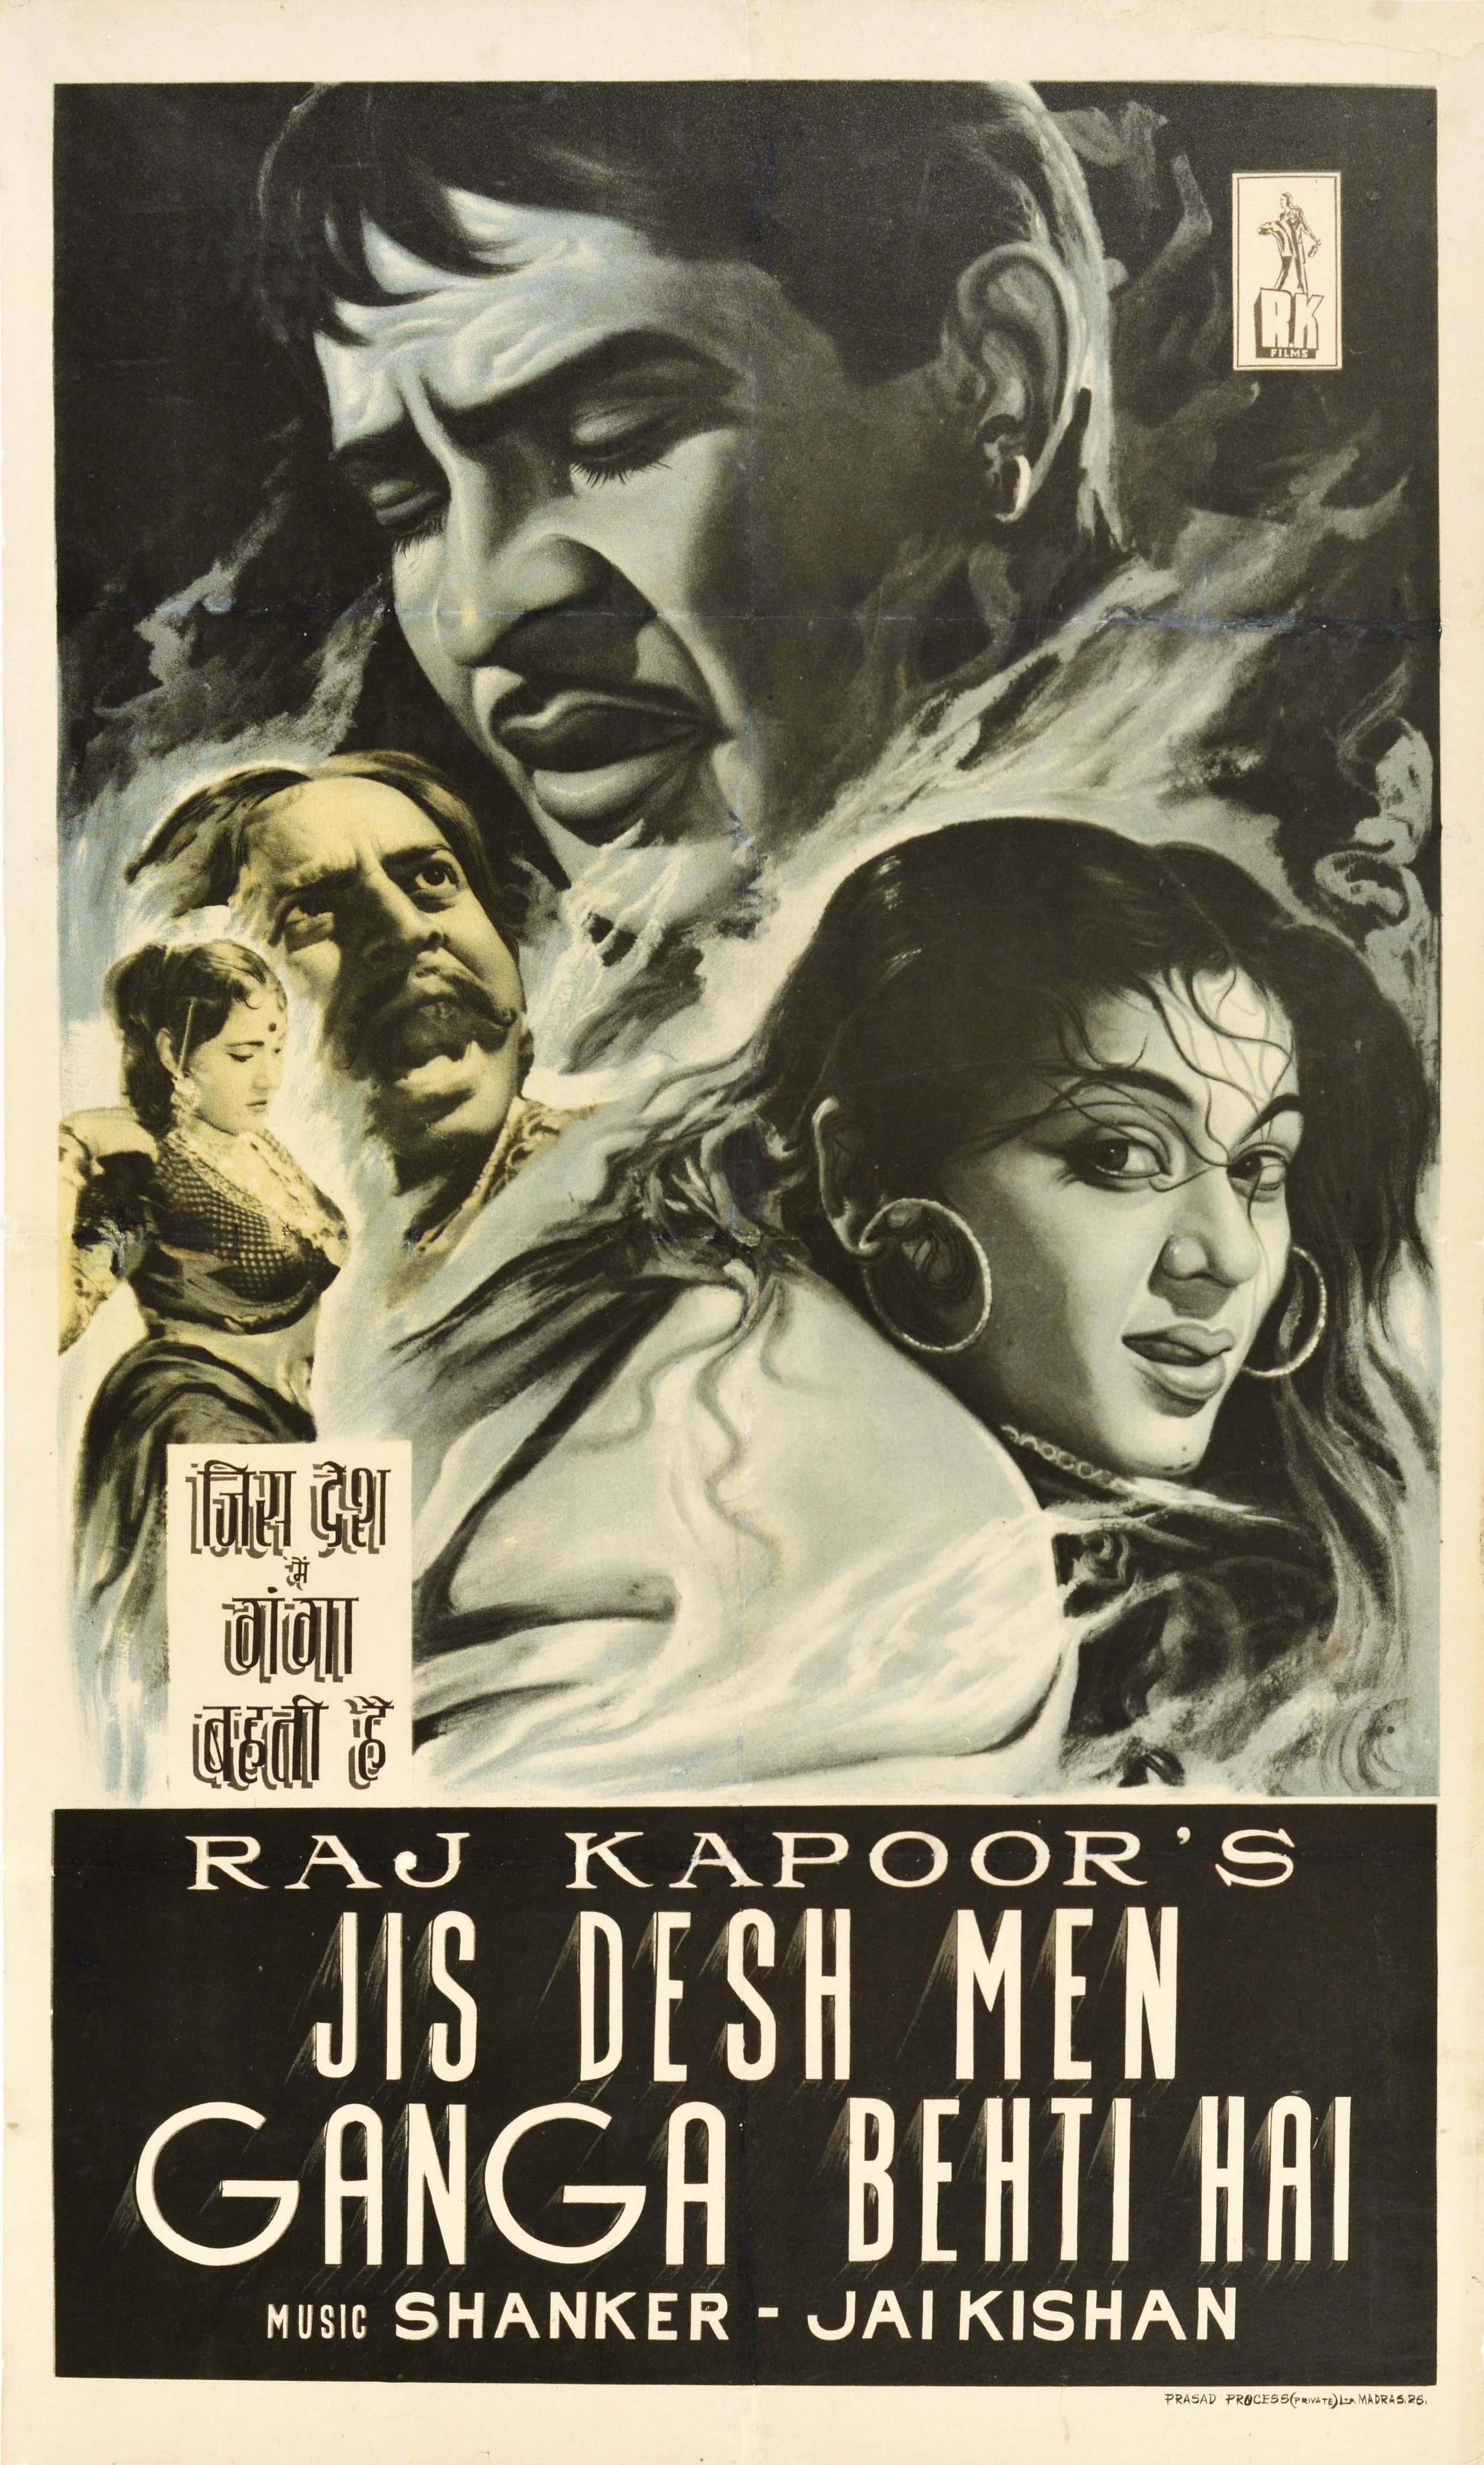 Unknown Print - Original Vintage Indian Film Poster For Raj Kapoor Jis Desh Mein Ganga Behti Hai